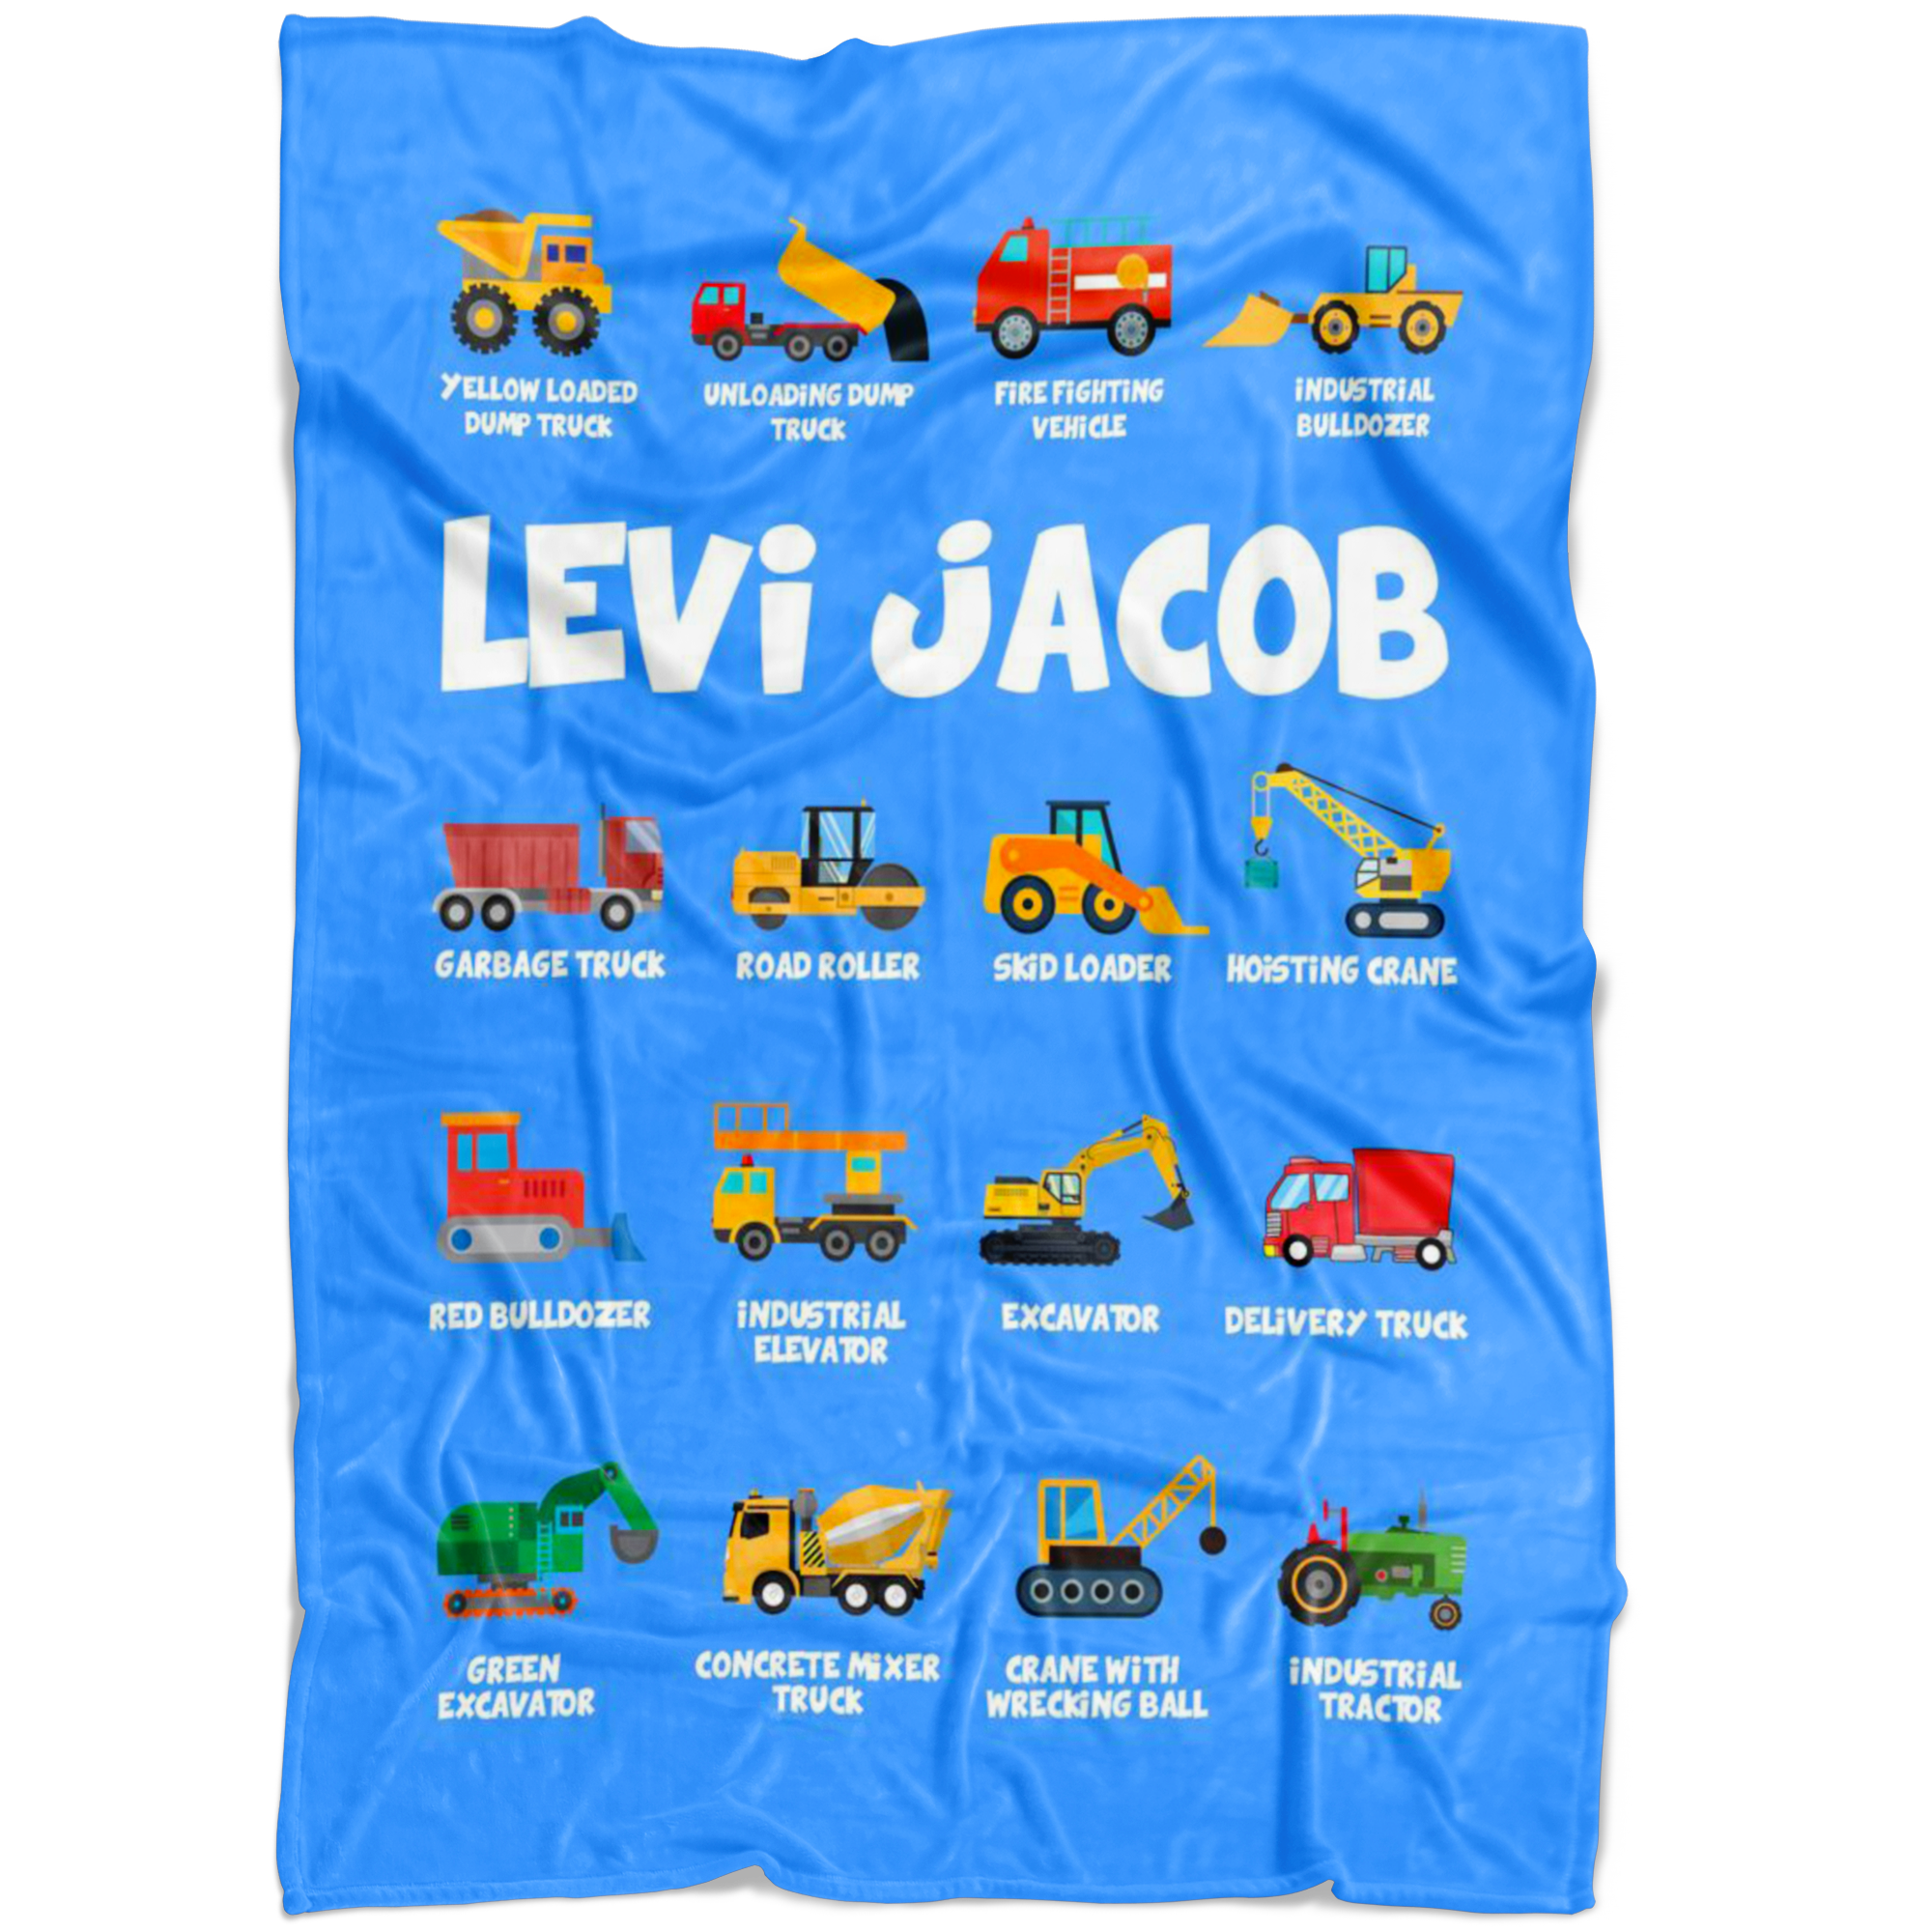 Levi Jacob Construction Blanket Blue